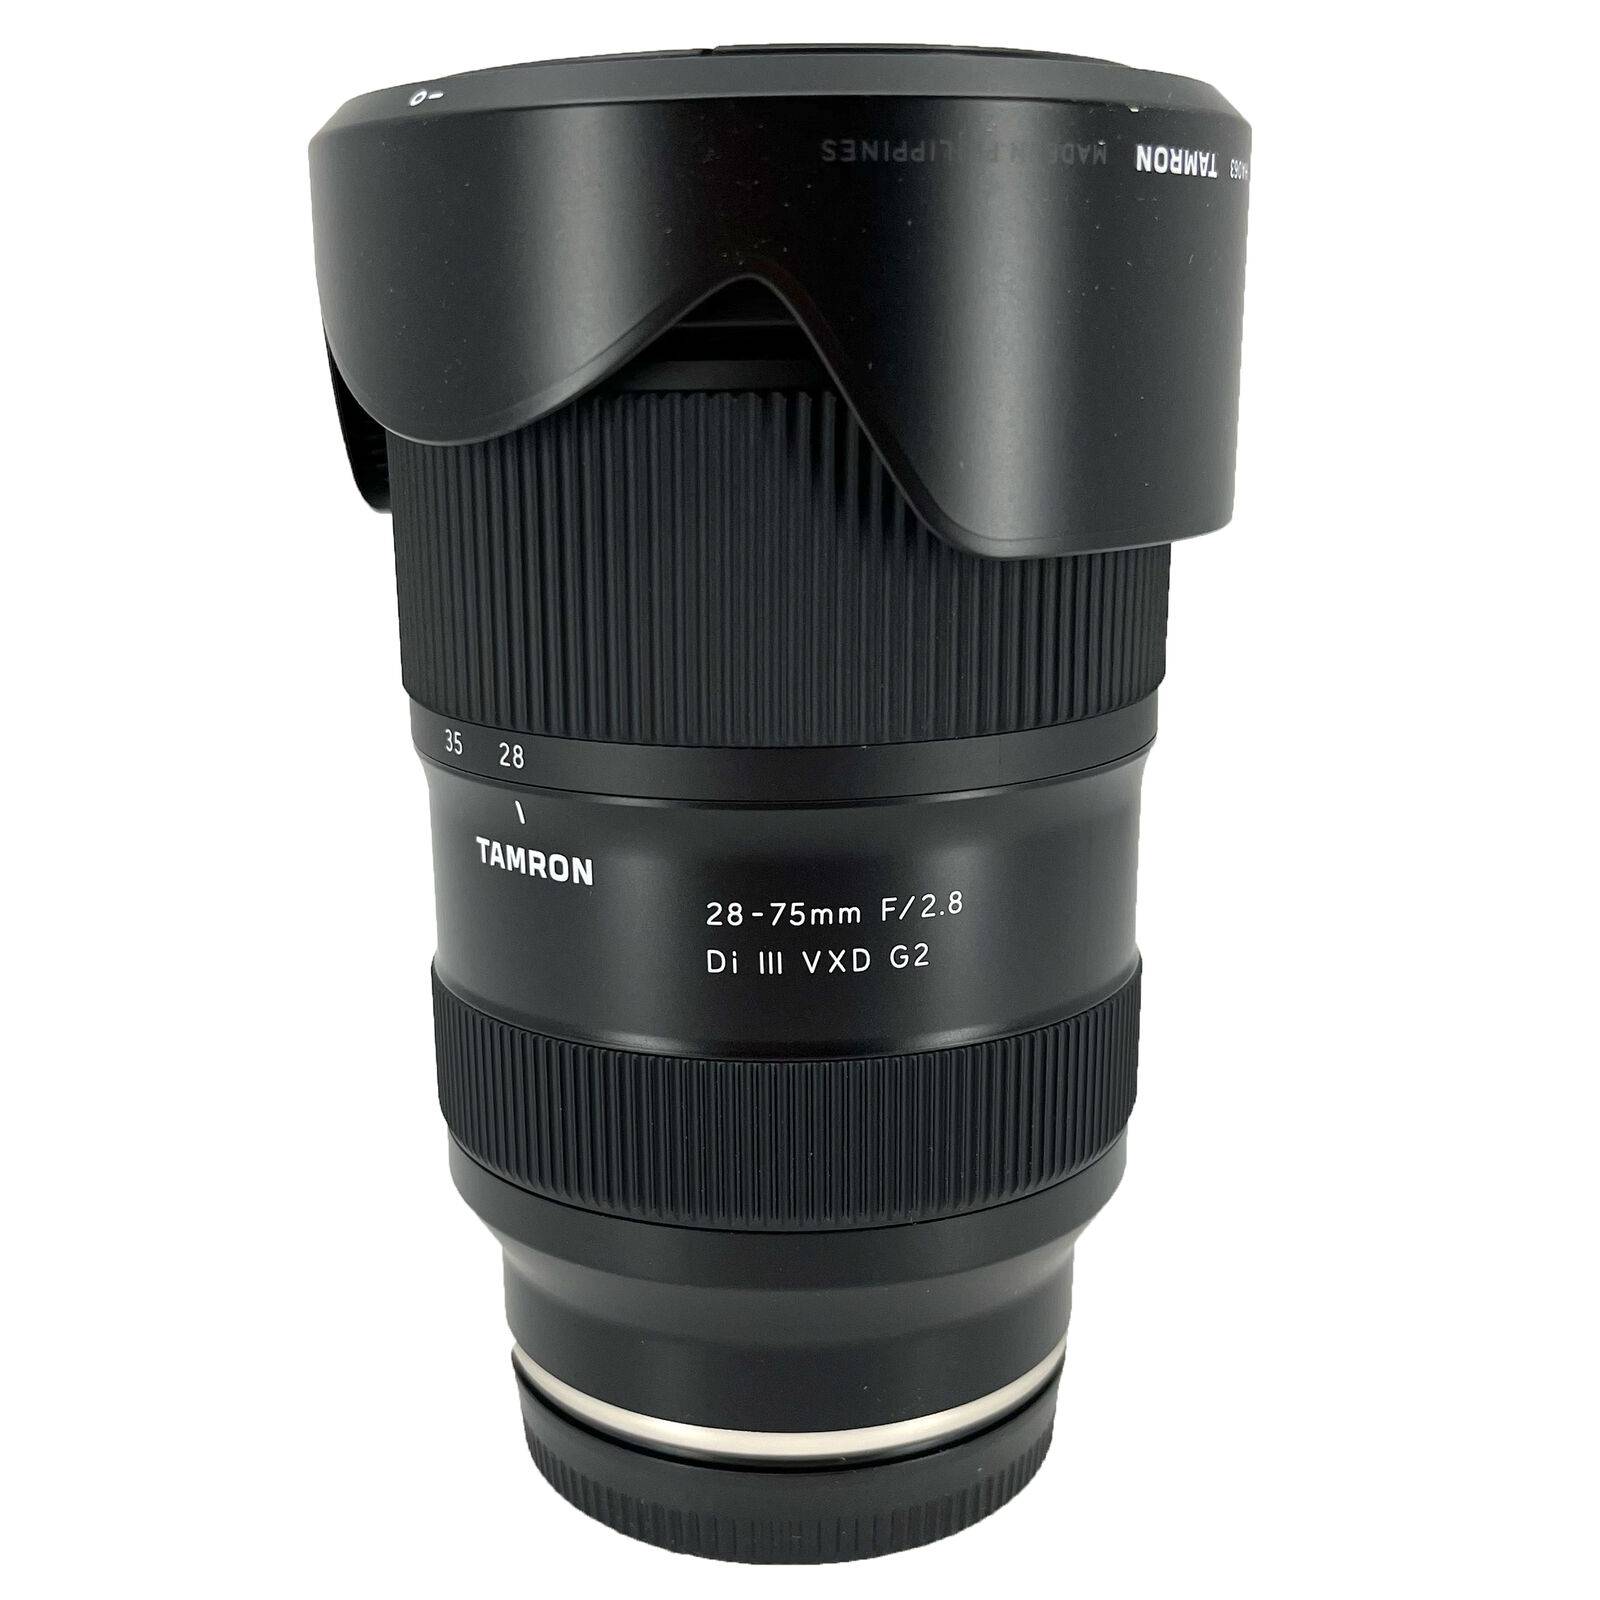 Tamron 28-75mm f/2.8 Di III VXD G2 Zoom Lens for Sony E-Mount - Invastor